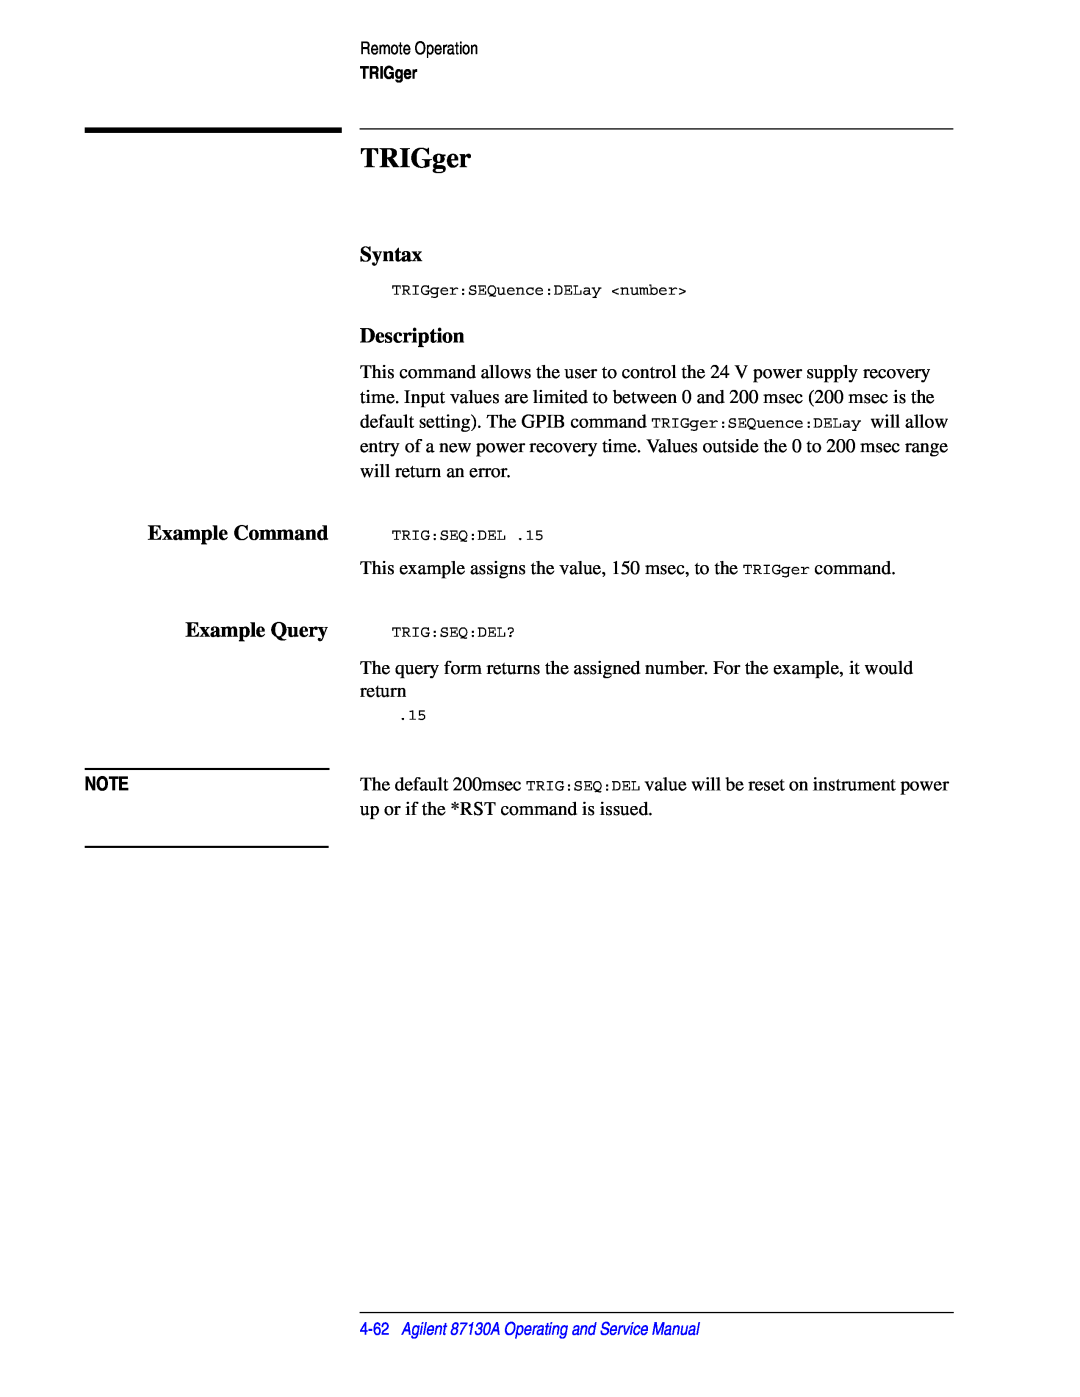 Agilent Technologies 87130A manual TRIGger, Syntax, Description, Example Command, Example Query 